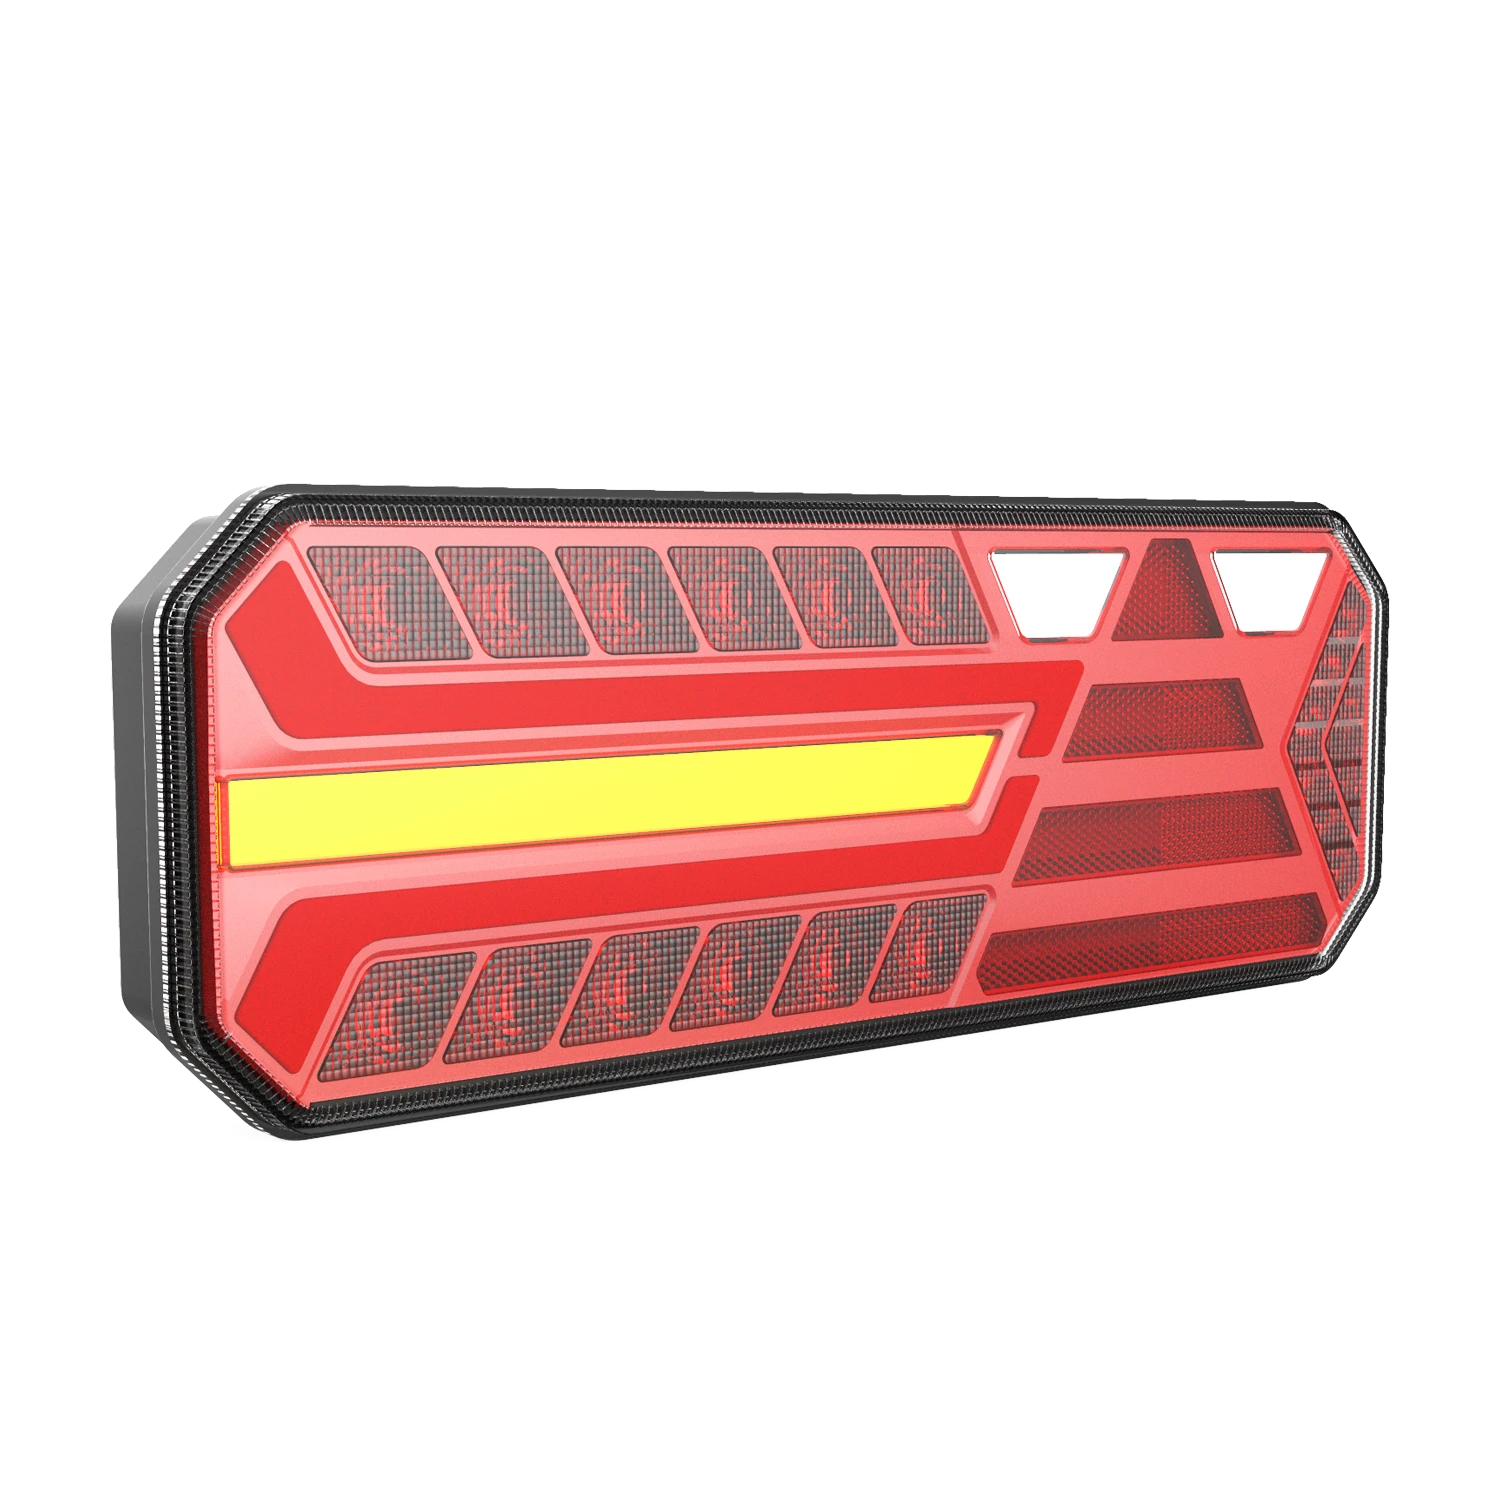 Truck Tail Light Combination Rear Truck Tail Light Combine Trailer Light vehicle accessories